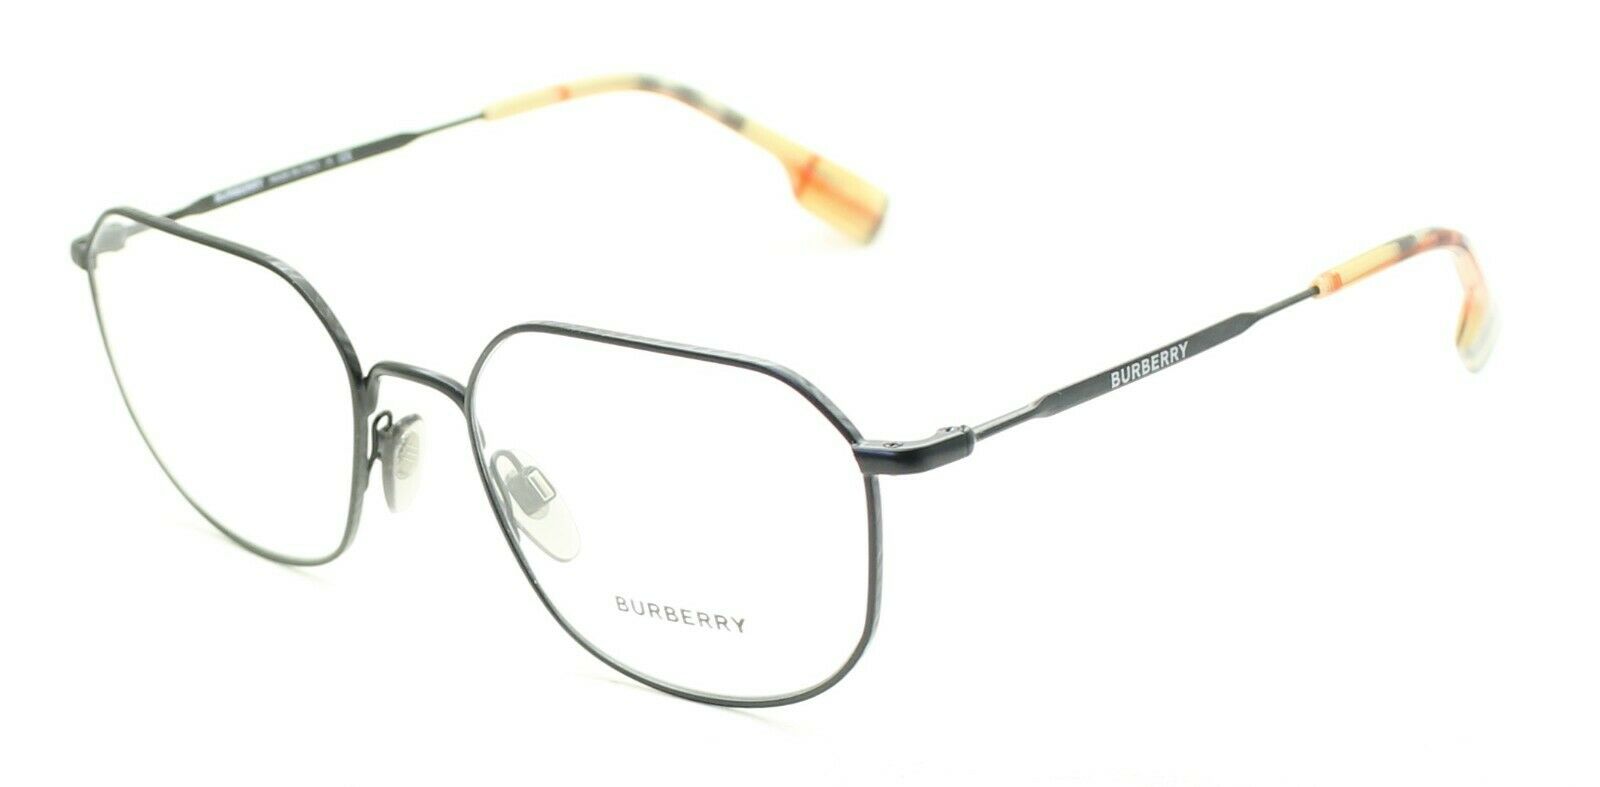 BURBERRY B 1335 1007 54mm Eyewear FRAMES RX Optical Glasses Eyeglasses New  Italy - GGV Eyewear